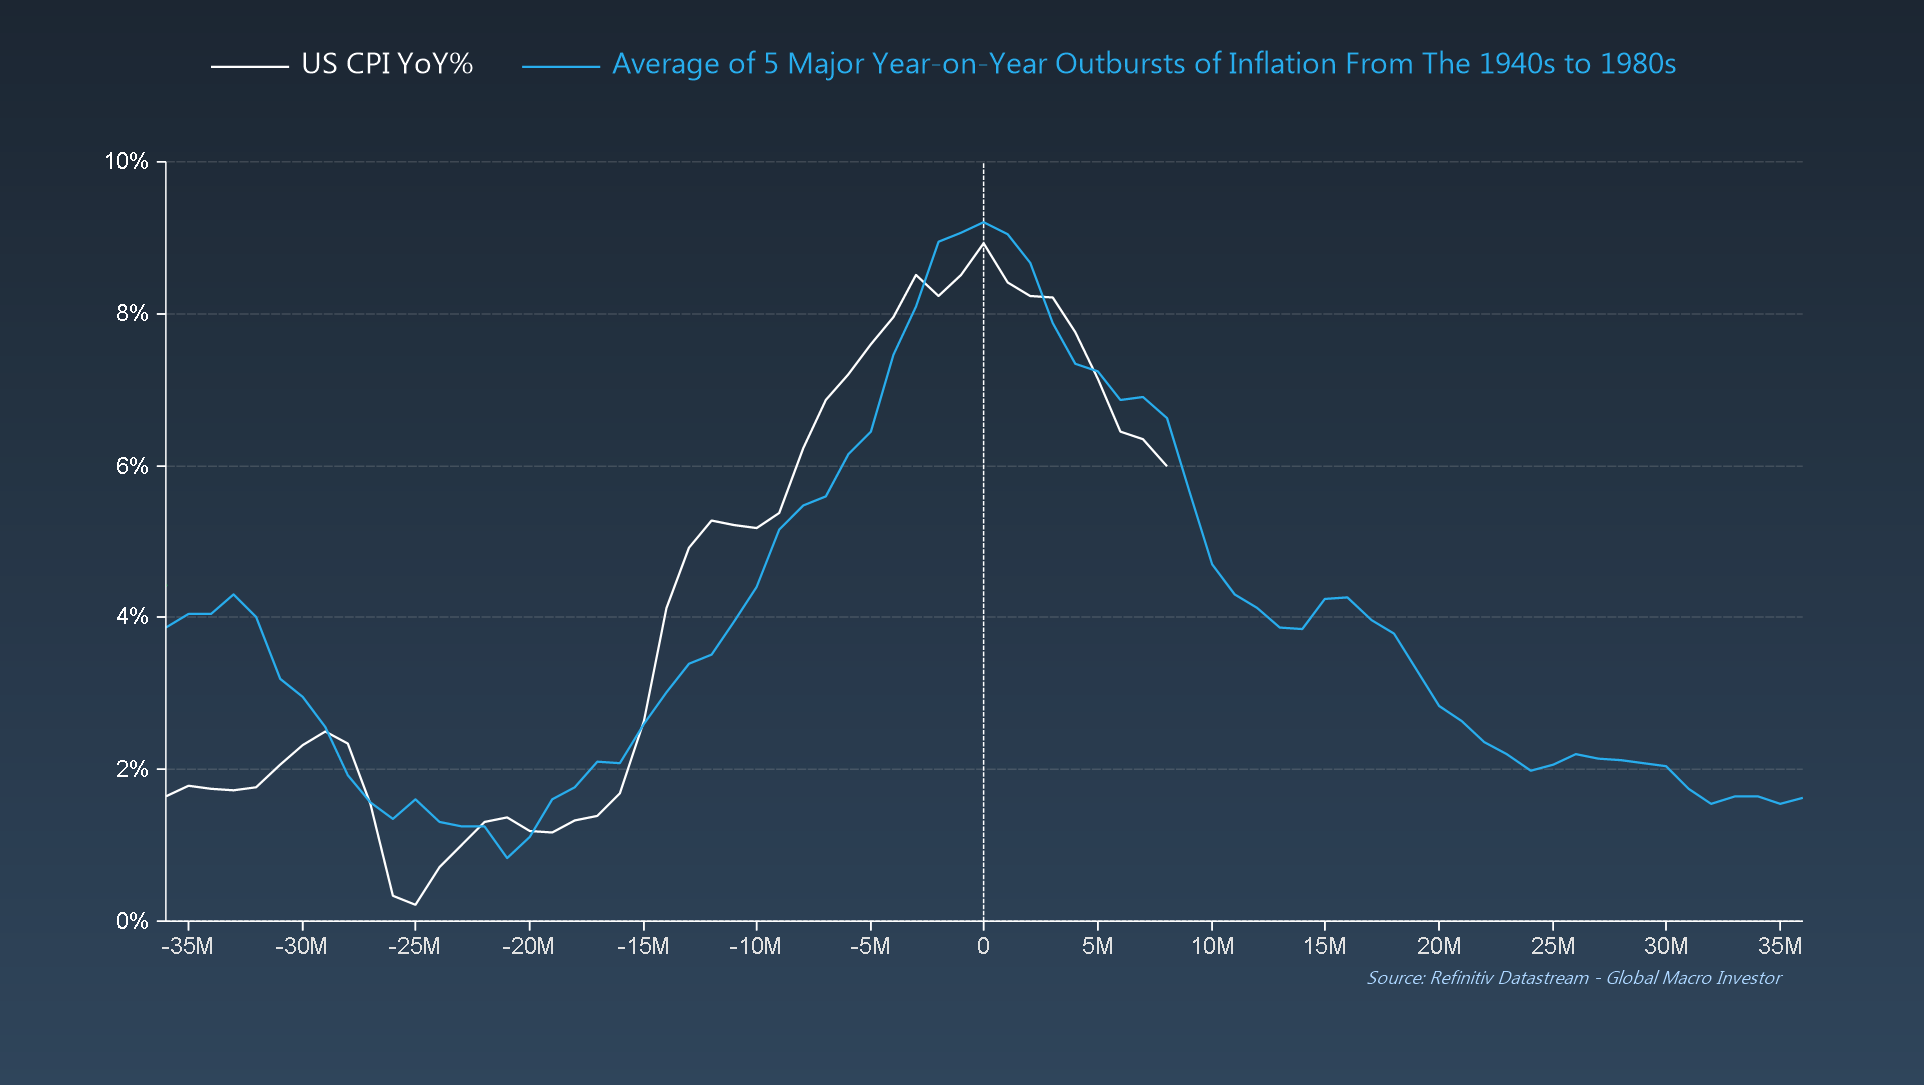 US CPI vs. Average of 5 Major YoY Outbursts of Inflation